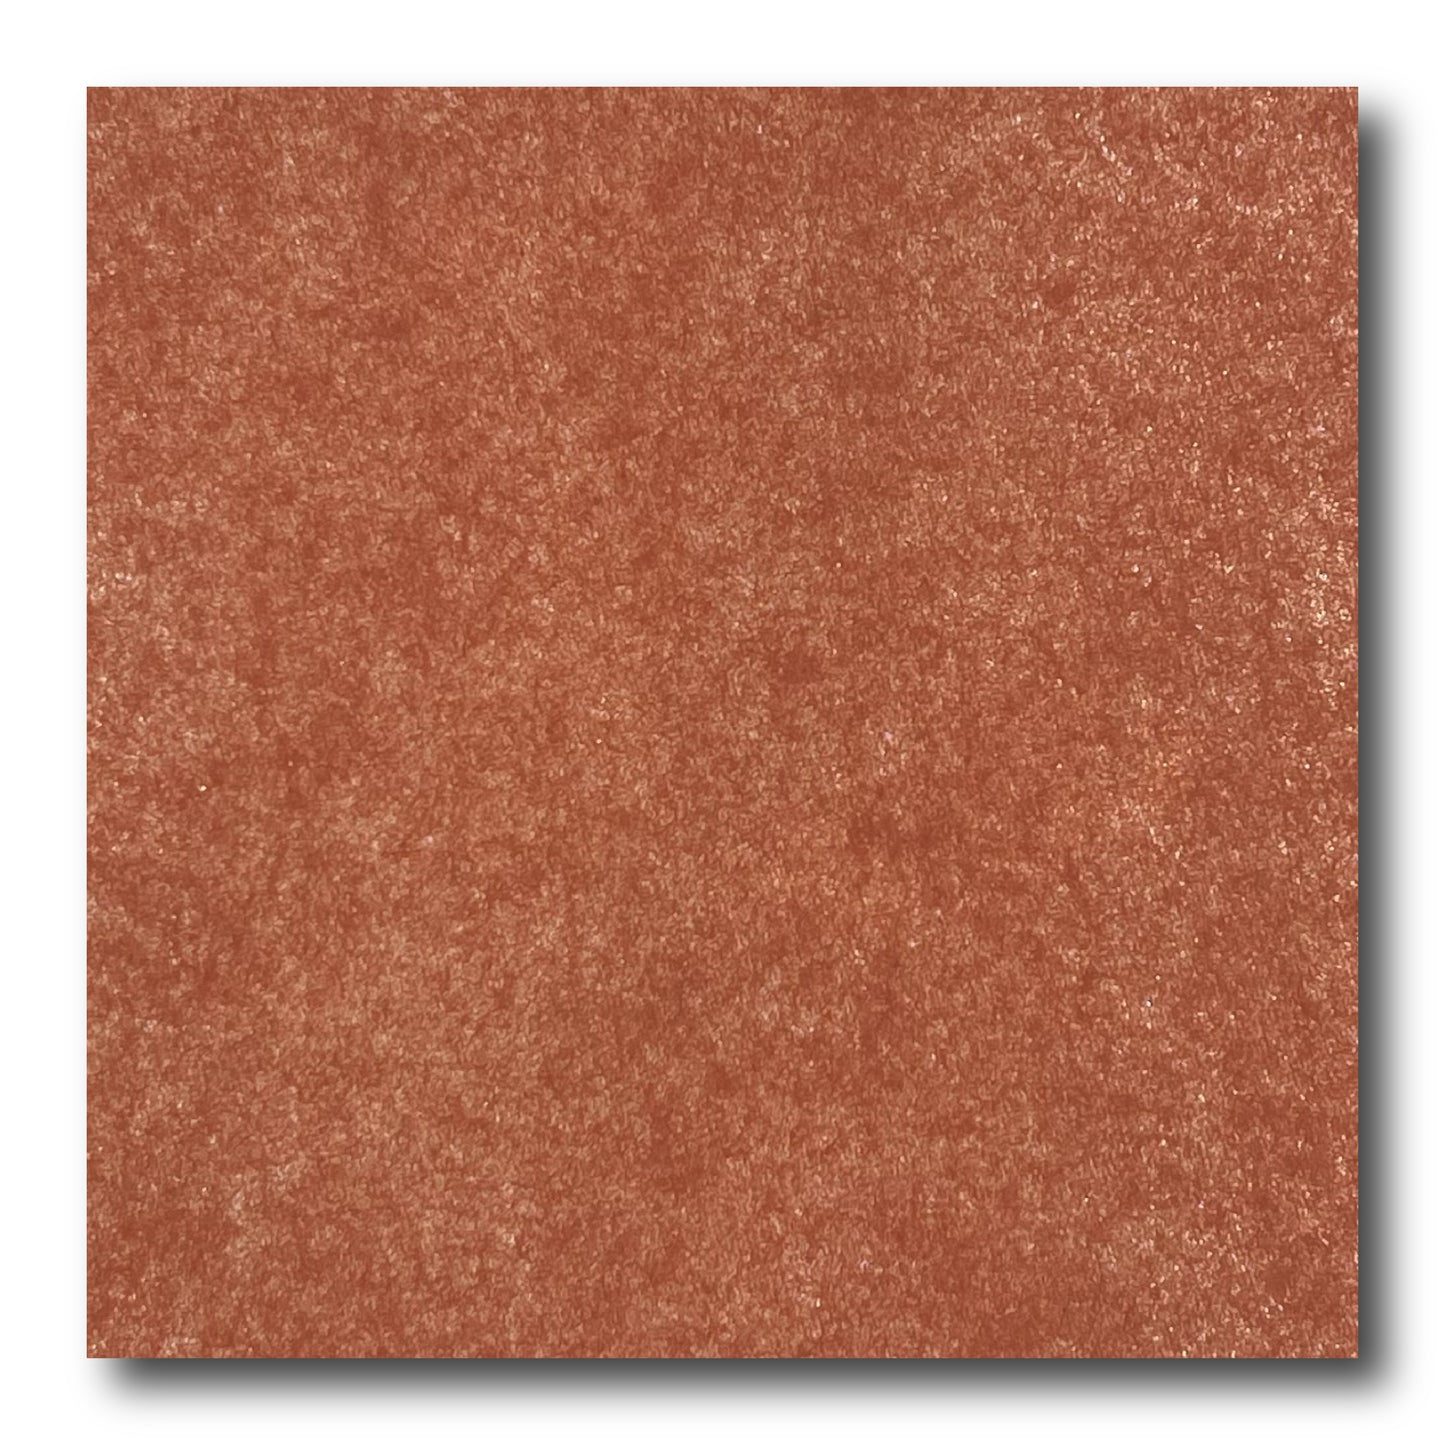 Double Tissue Foil Origami (Dual Color: Dark Orange/Sandstone) (Sold per sheet)